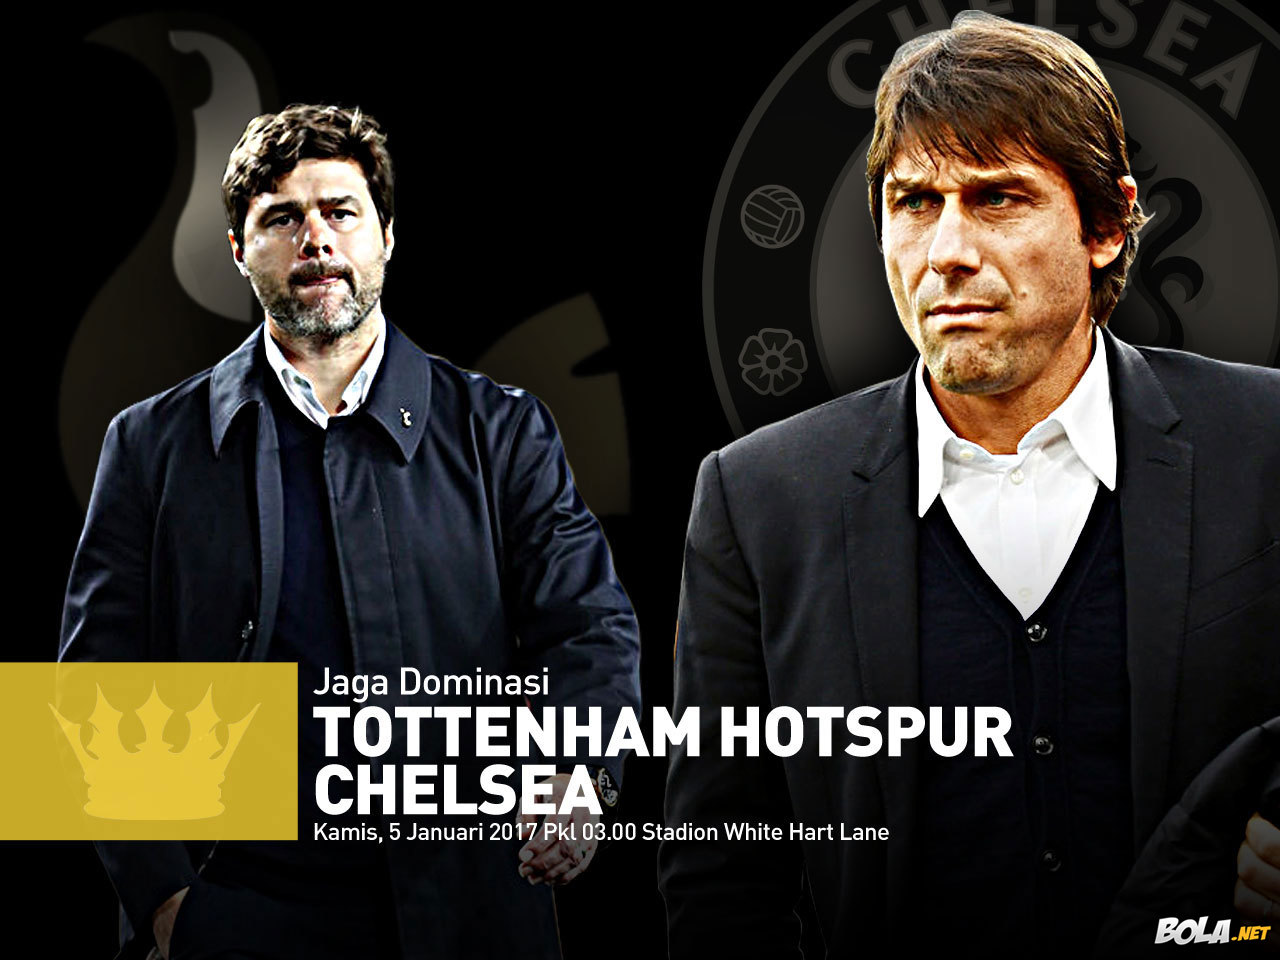 Deskripsi : Wallpaper Tottenham Hotspur Vs Chelsea, size: 1280x960